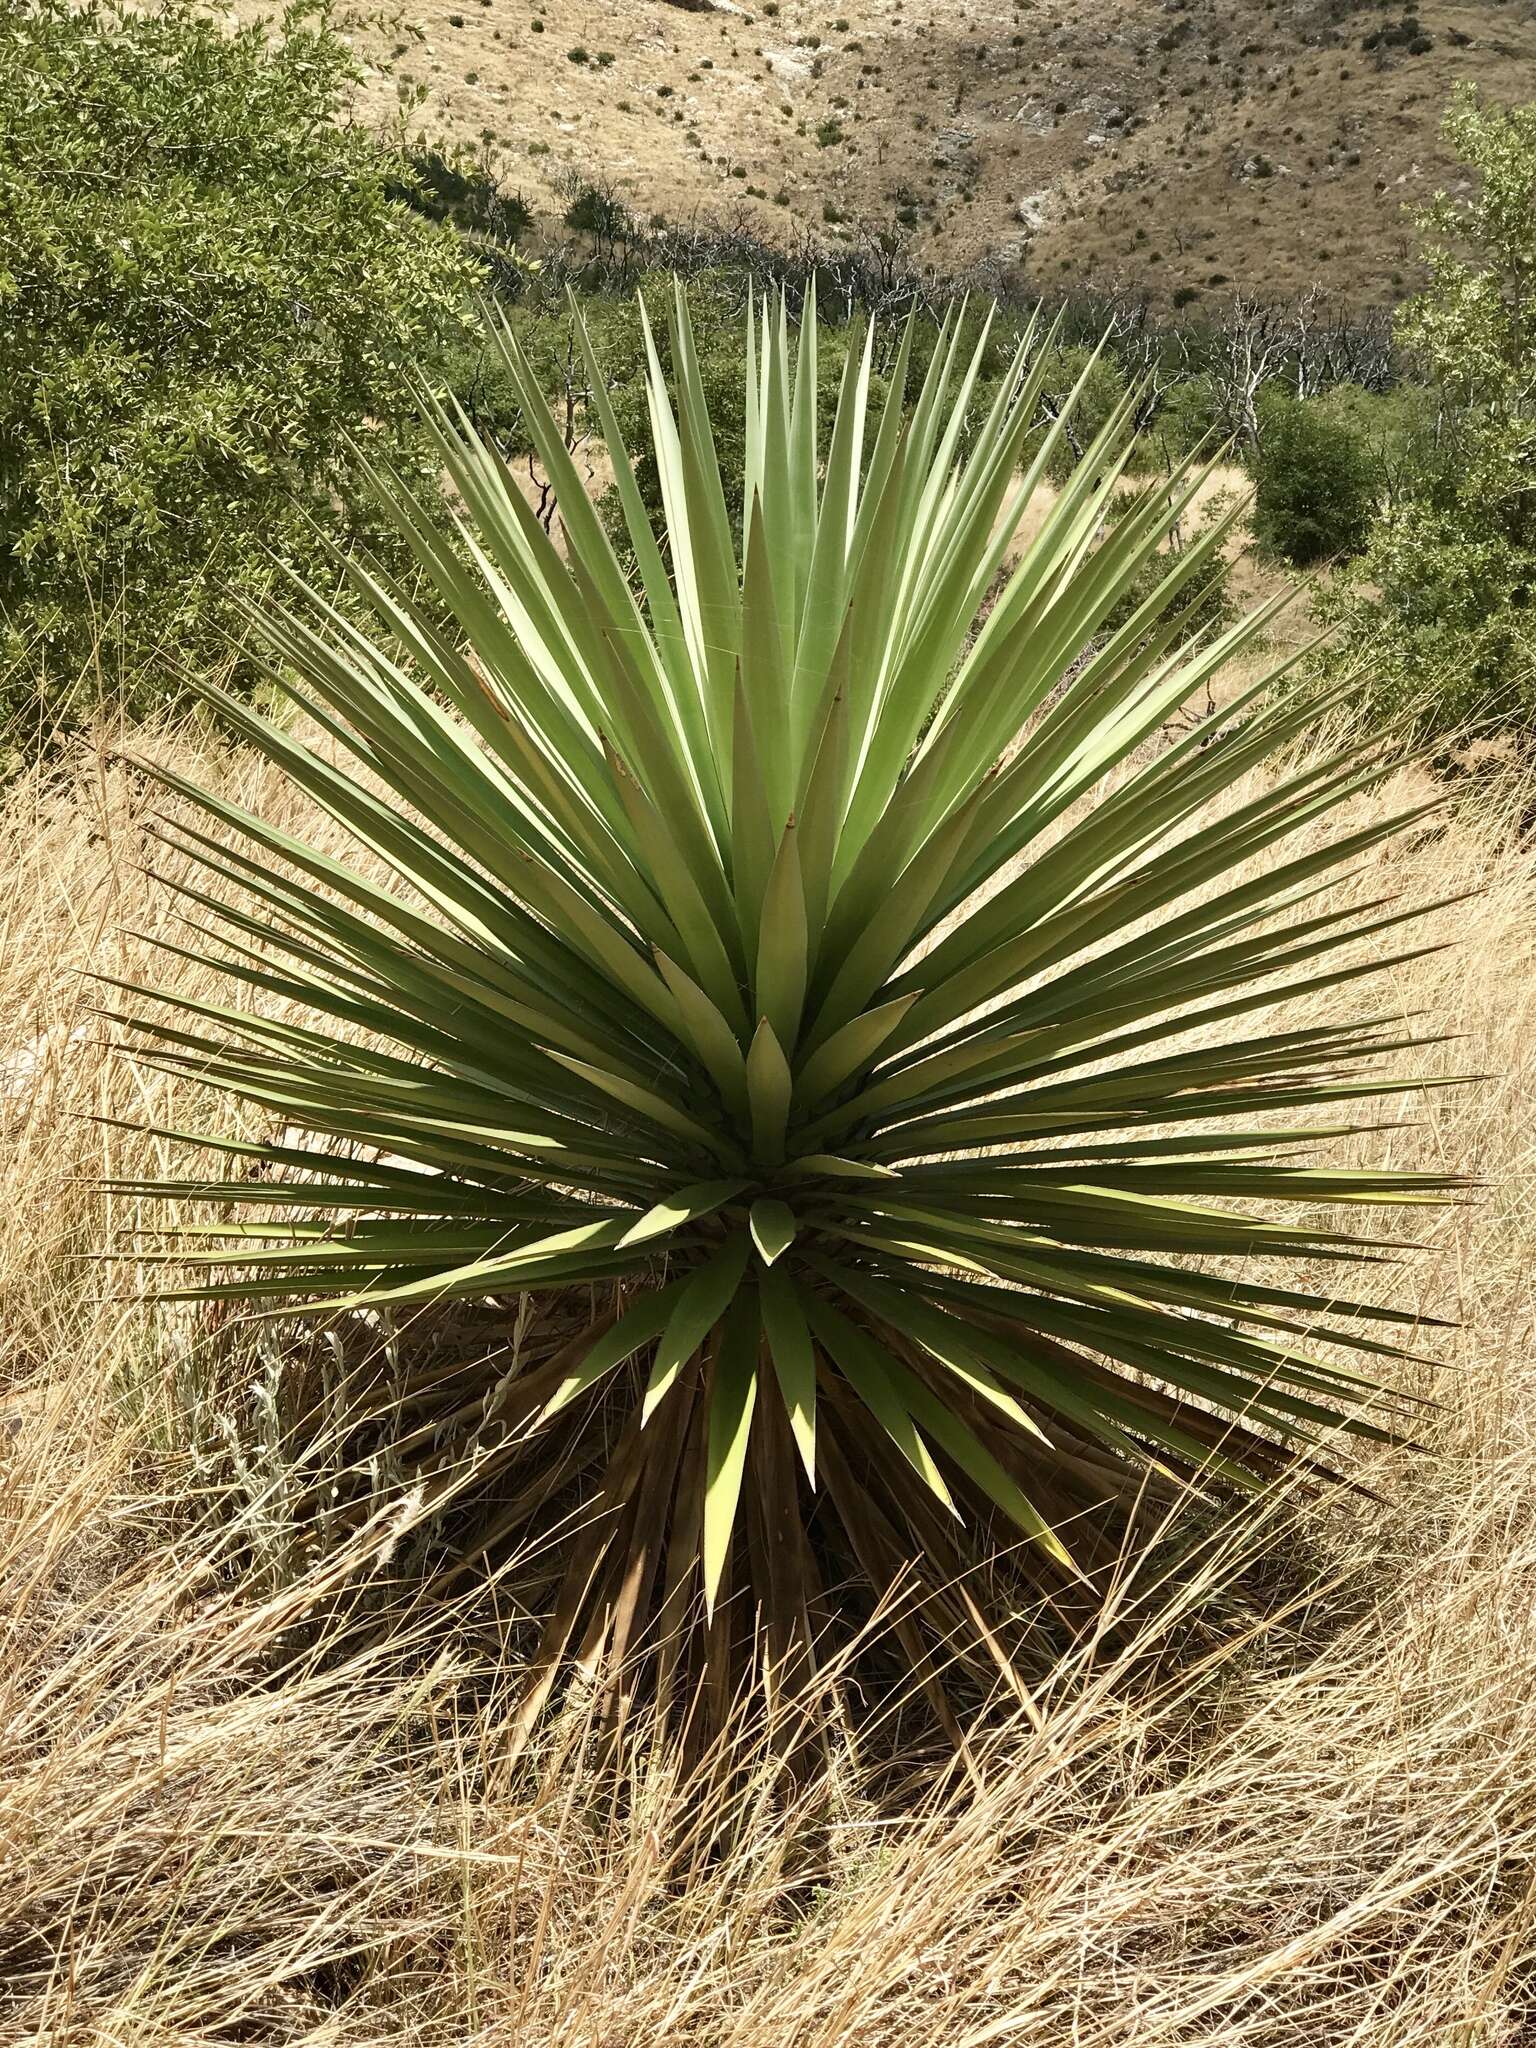 Image of yucca